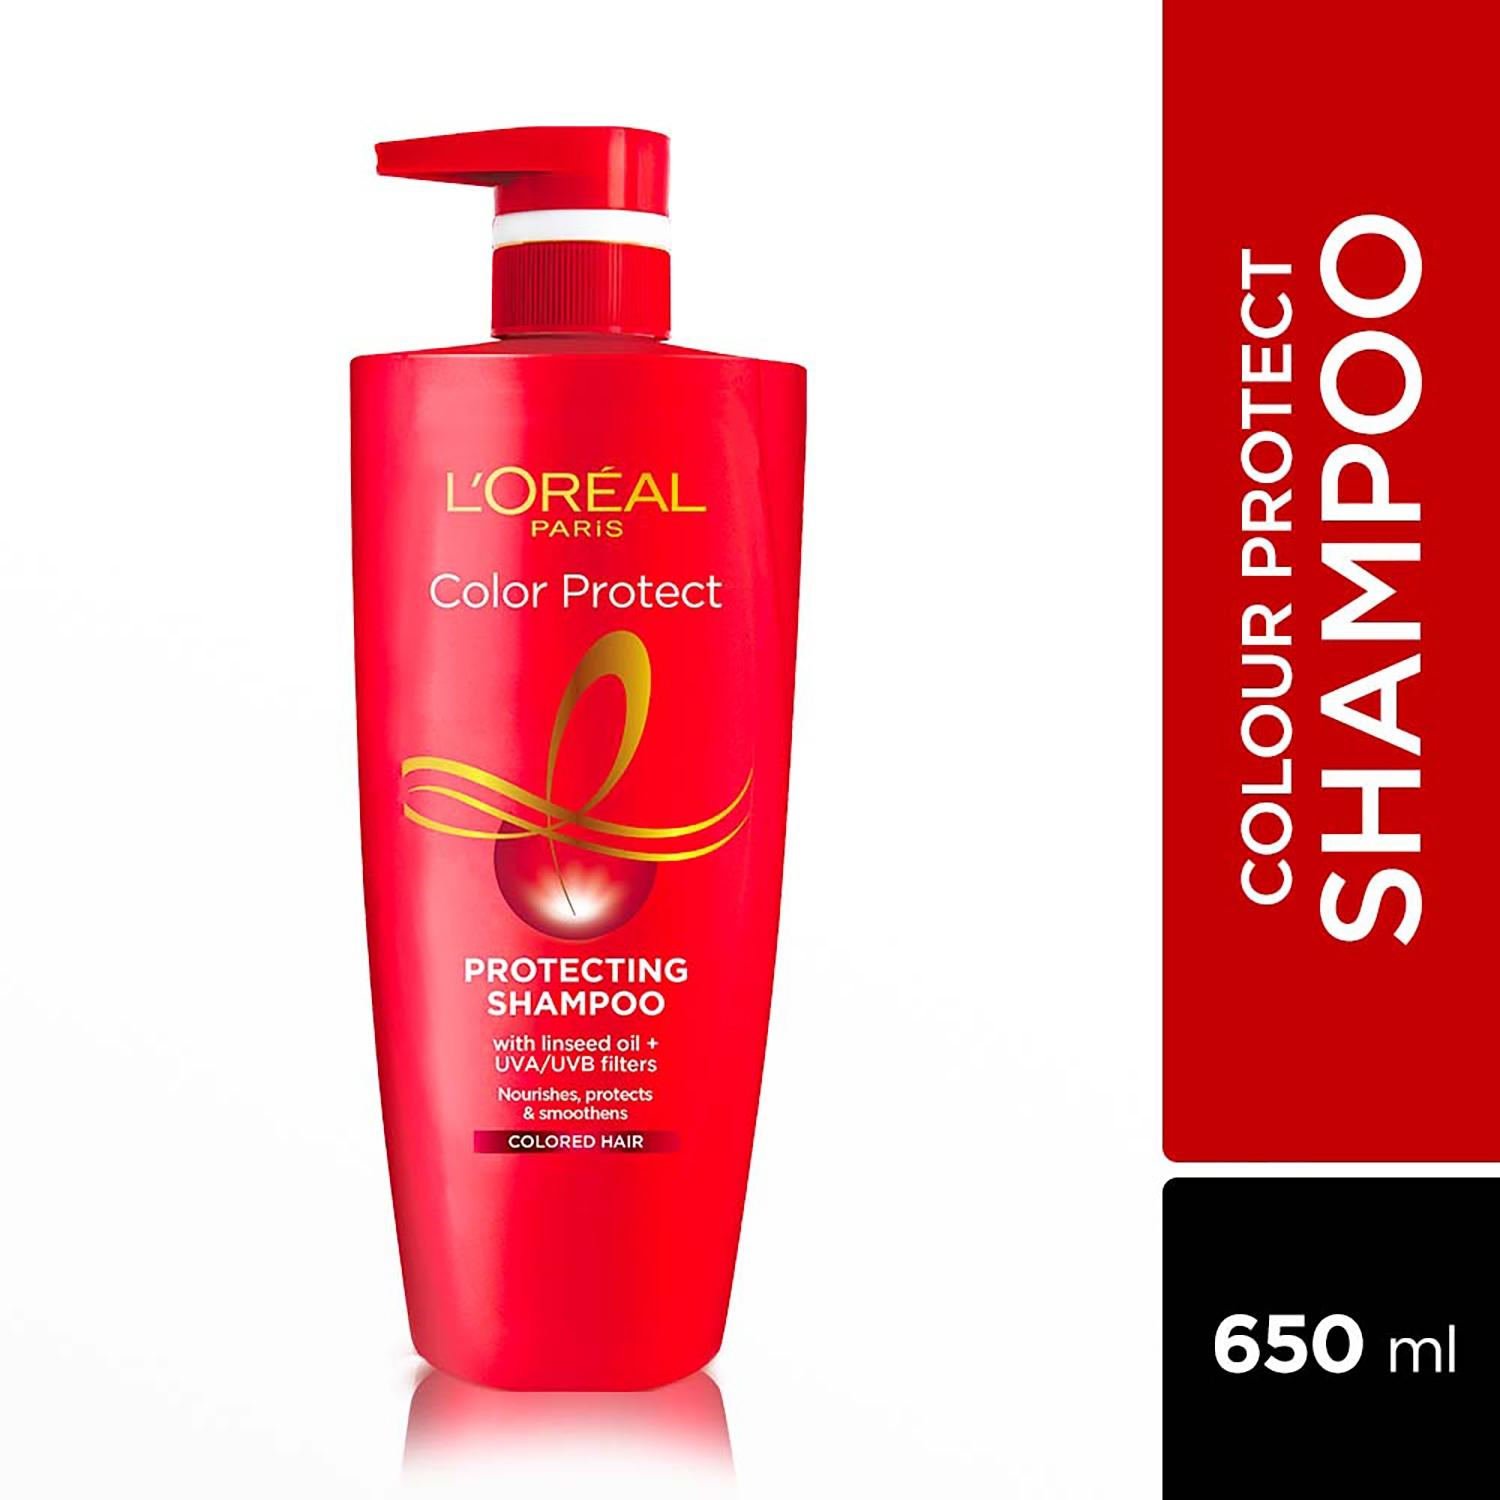 l'oreal-paris-color-protect-shampoo,-704-ml